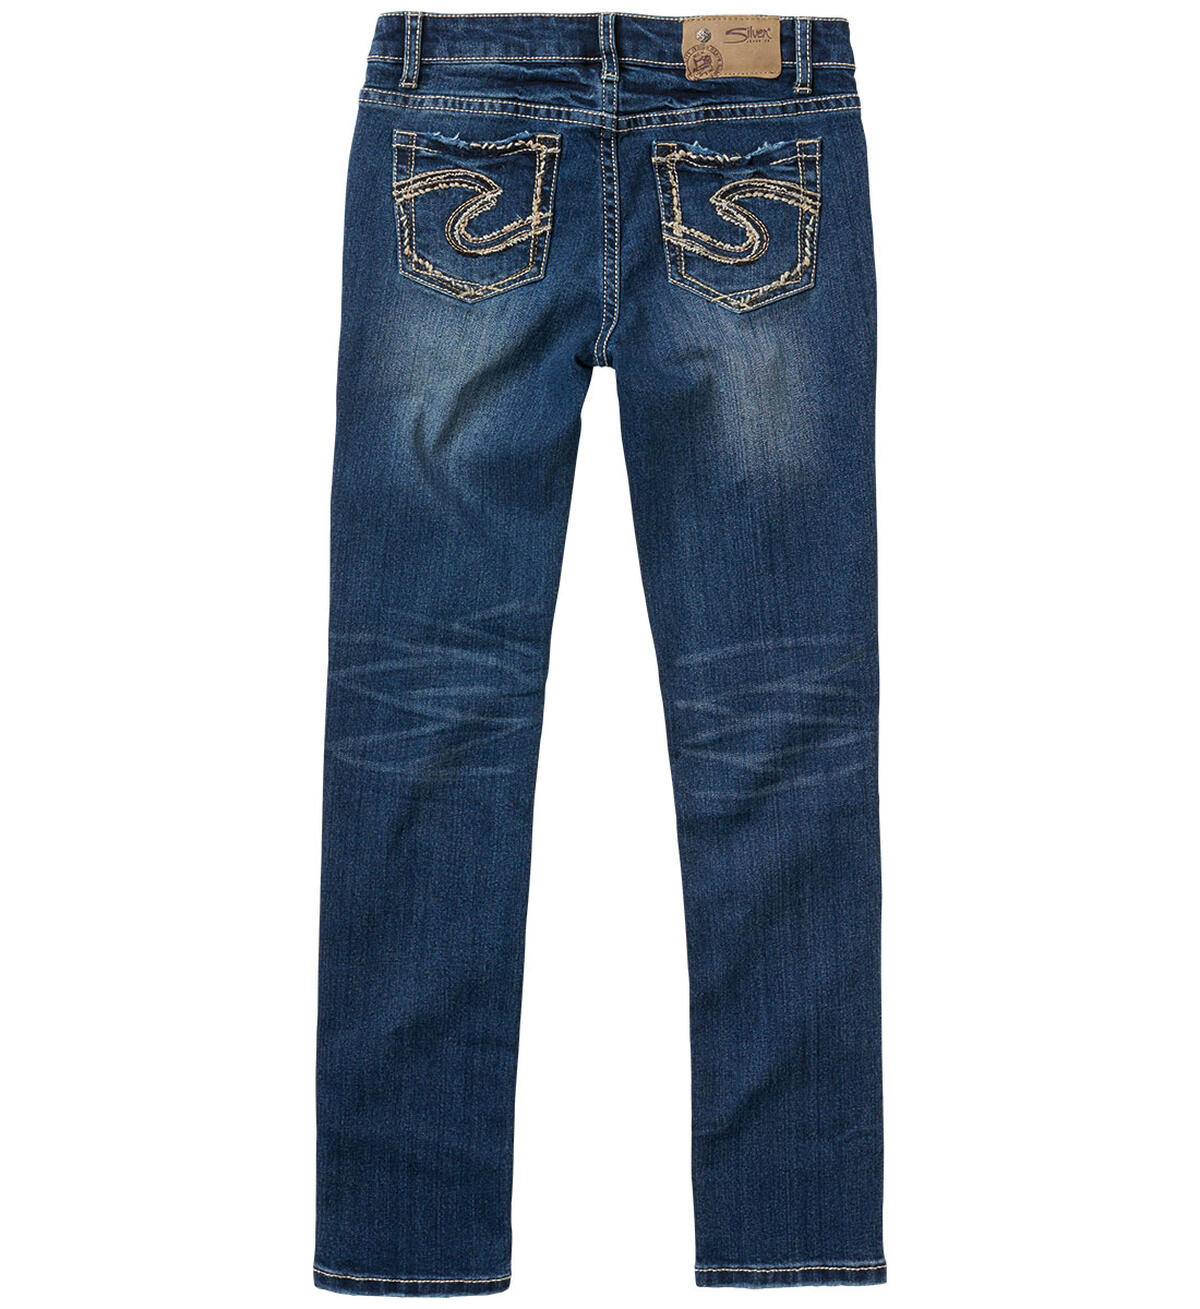 Sasha Skinny Jeans in Dark Wash (4-7), , hi-res image number 1